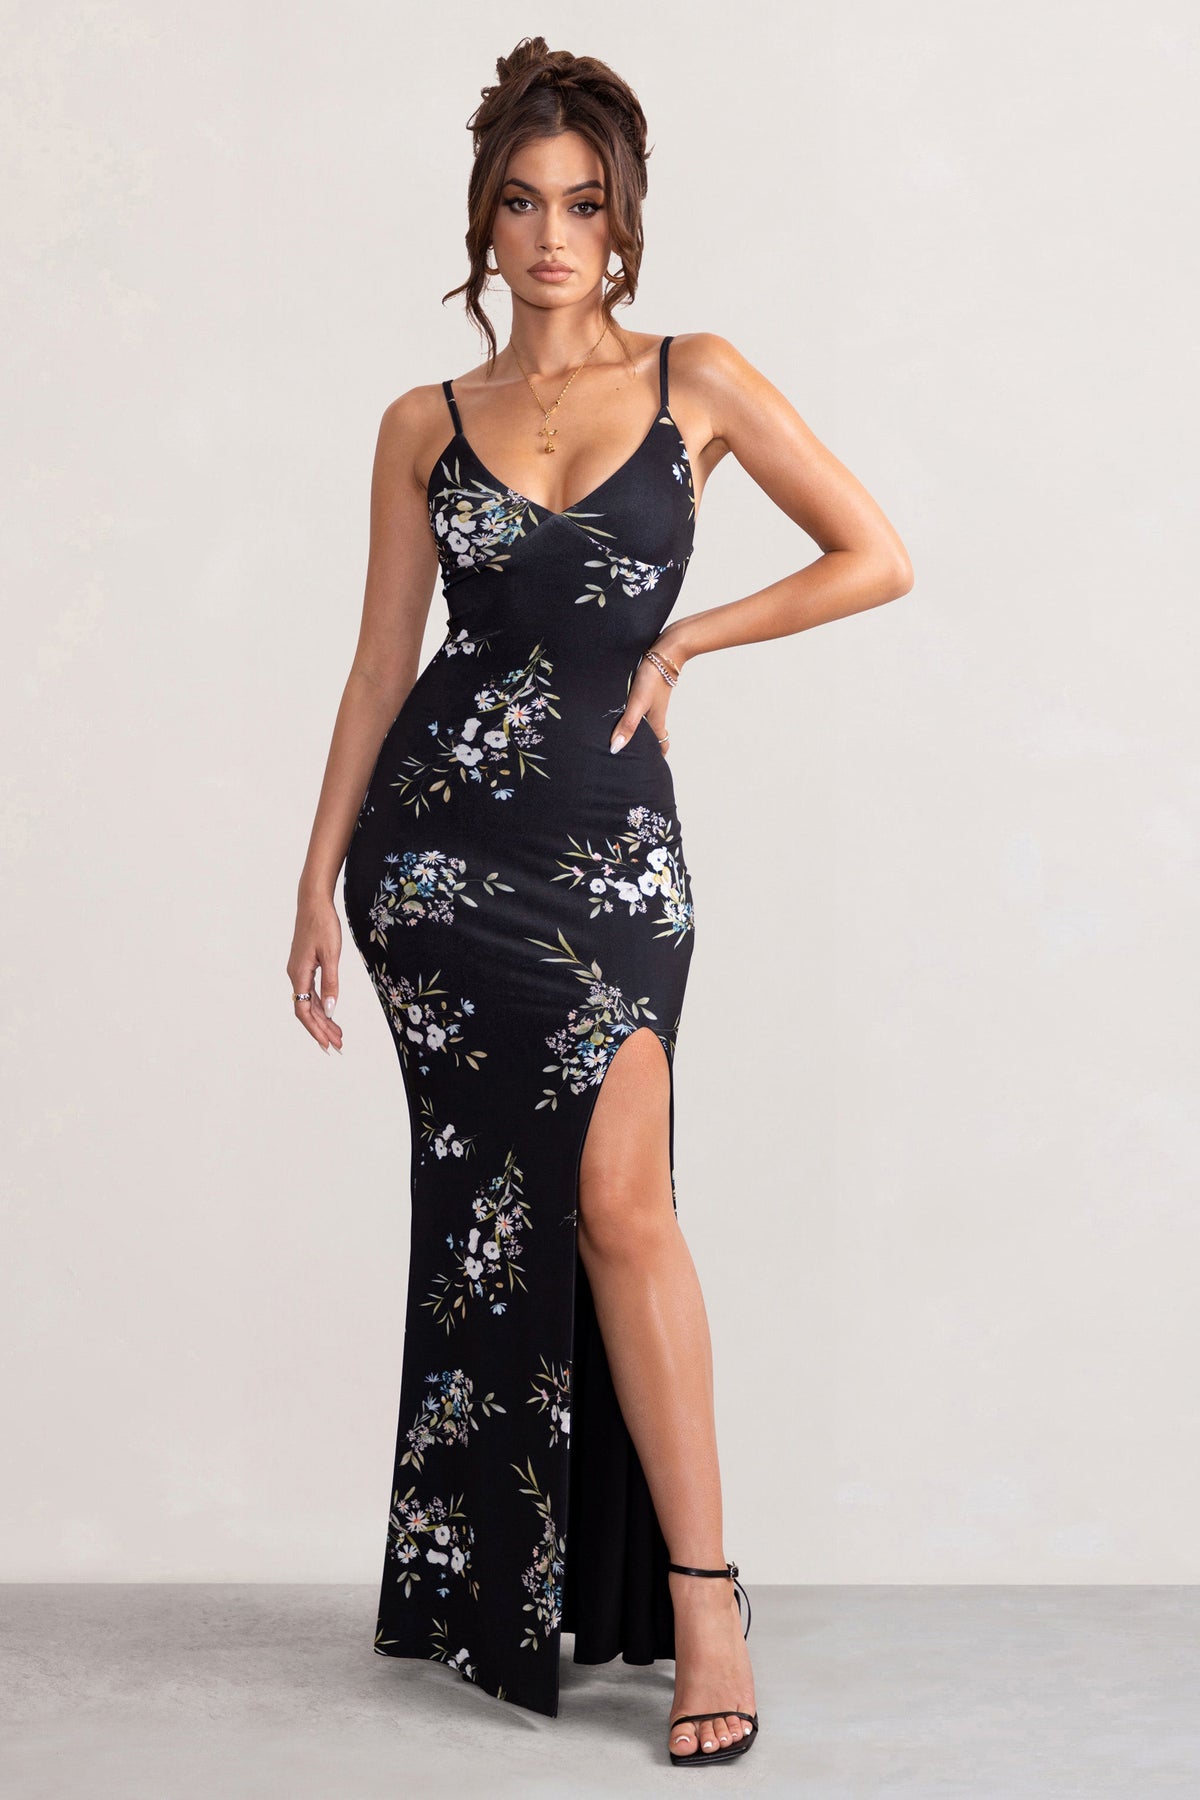 Floral Black Maxi Gown for Women - Evilato Online Shopping